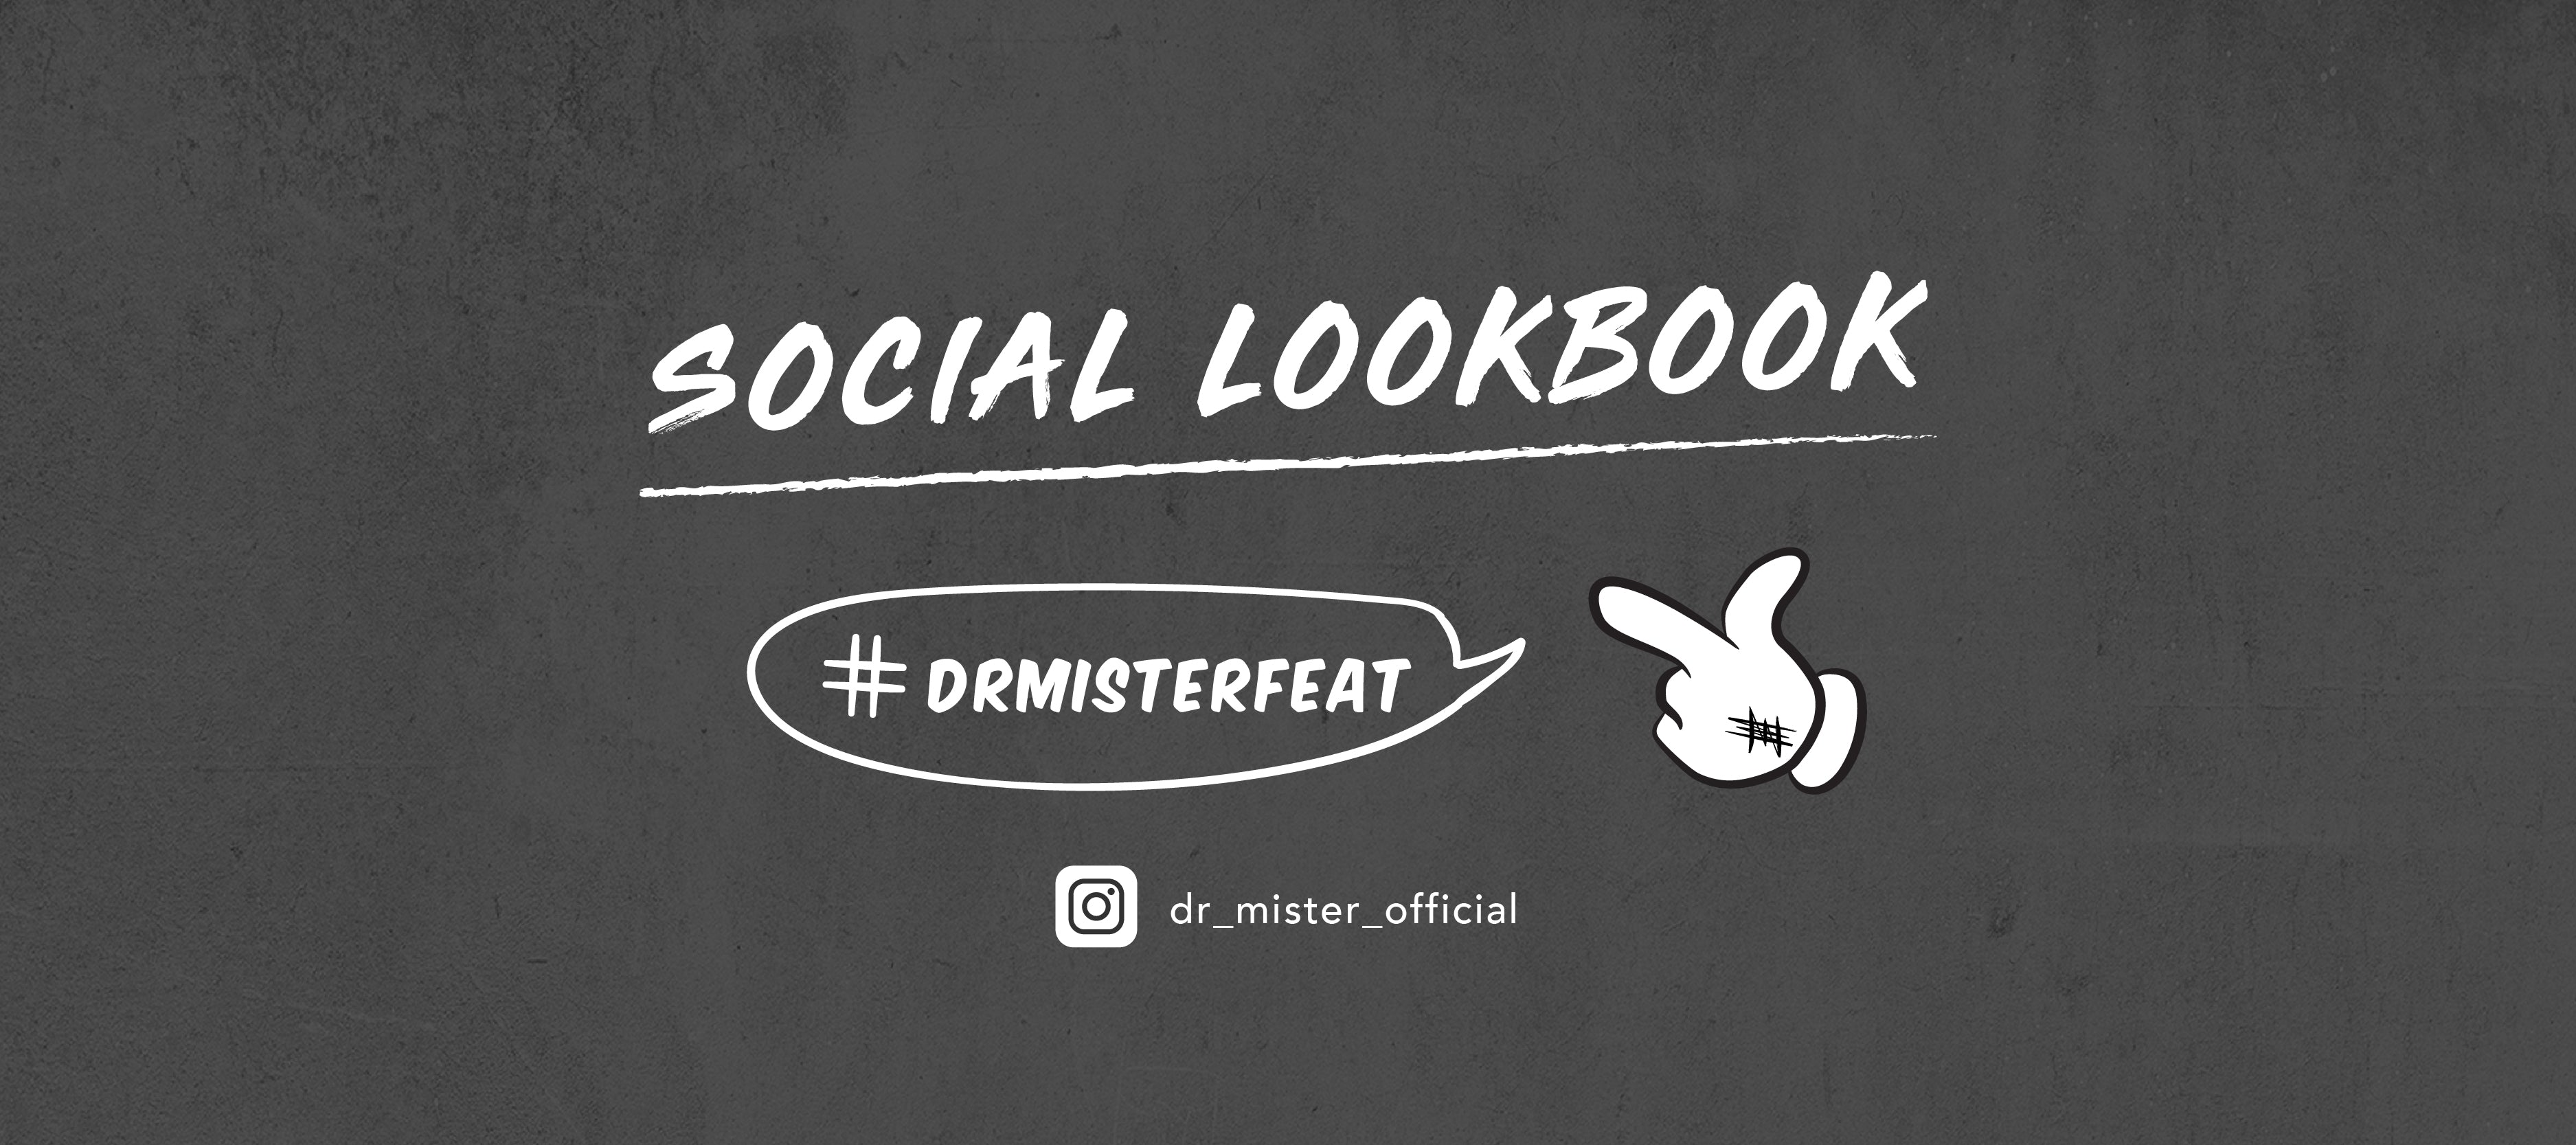 The Social Lookbook Launch!